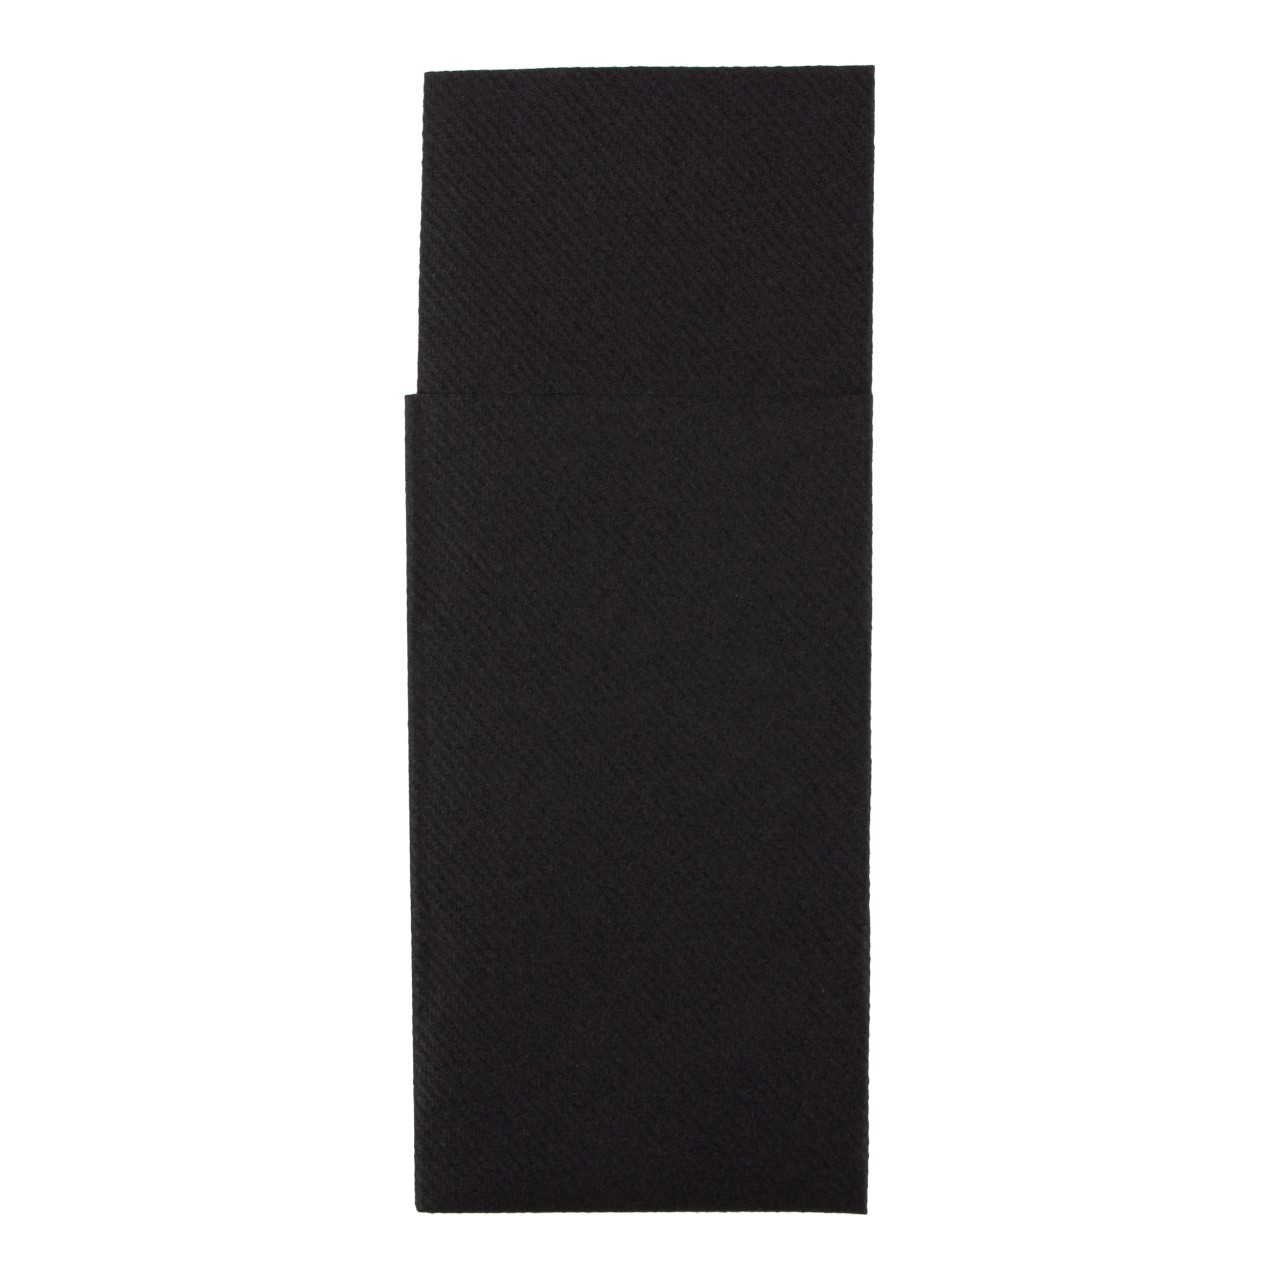 Bestek vouwservet 40 x 33 cm, zwart